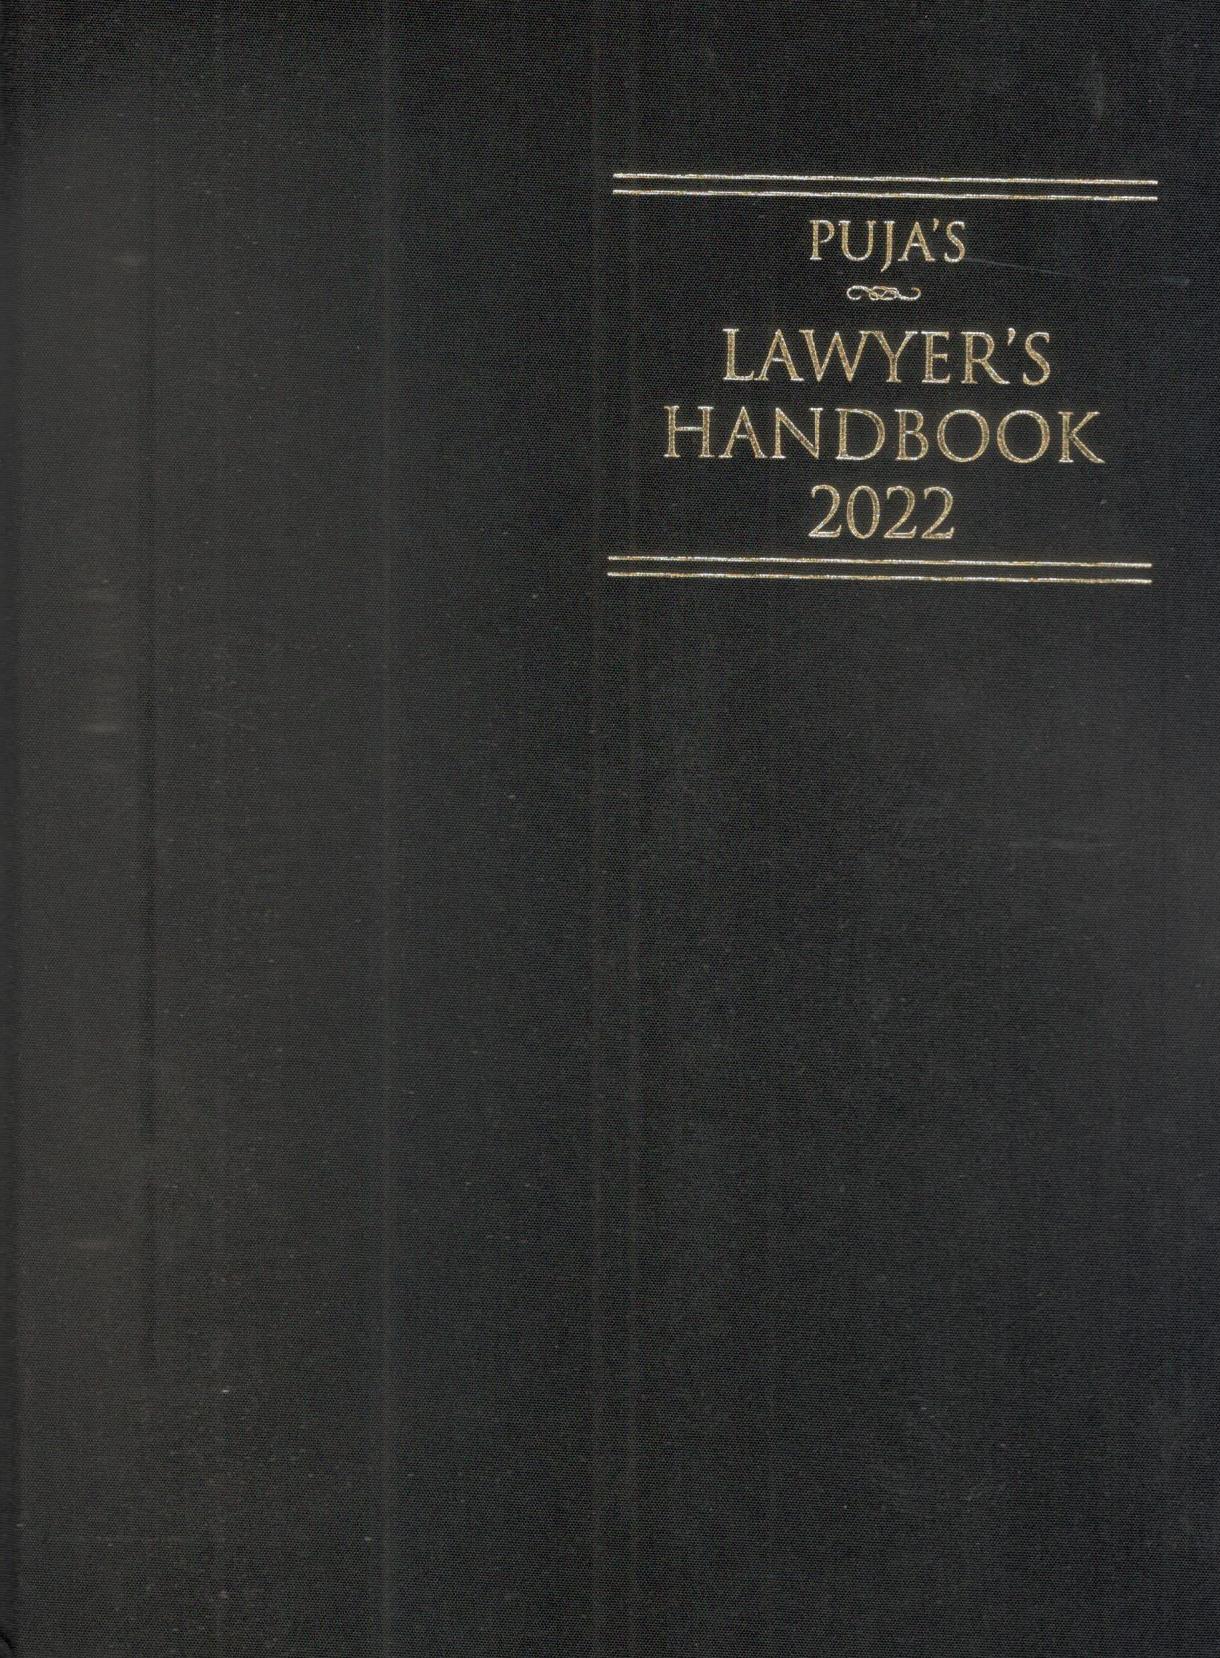 Puja’s Lawyer’s Handbook 2022 - Black Small Size Regular Hardbound